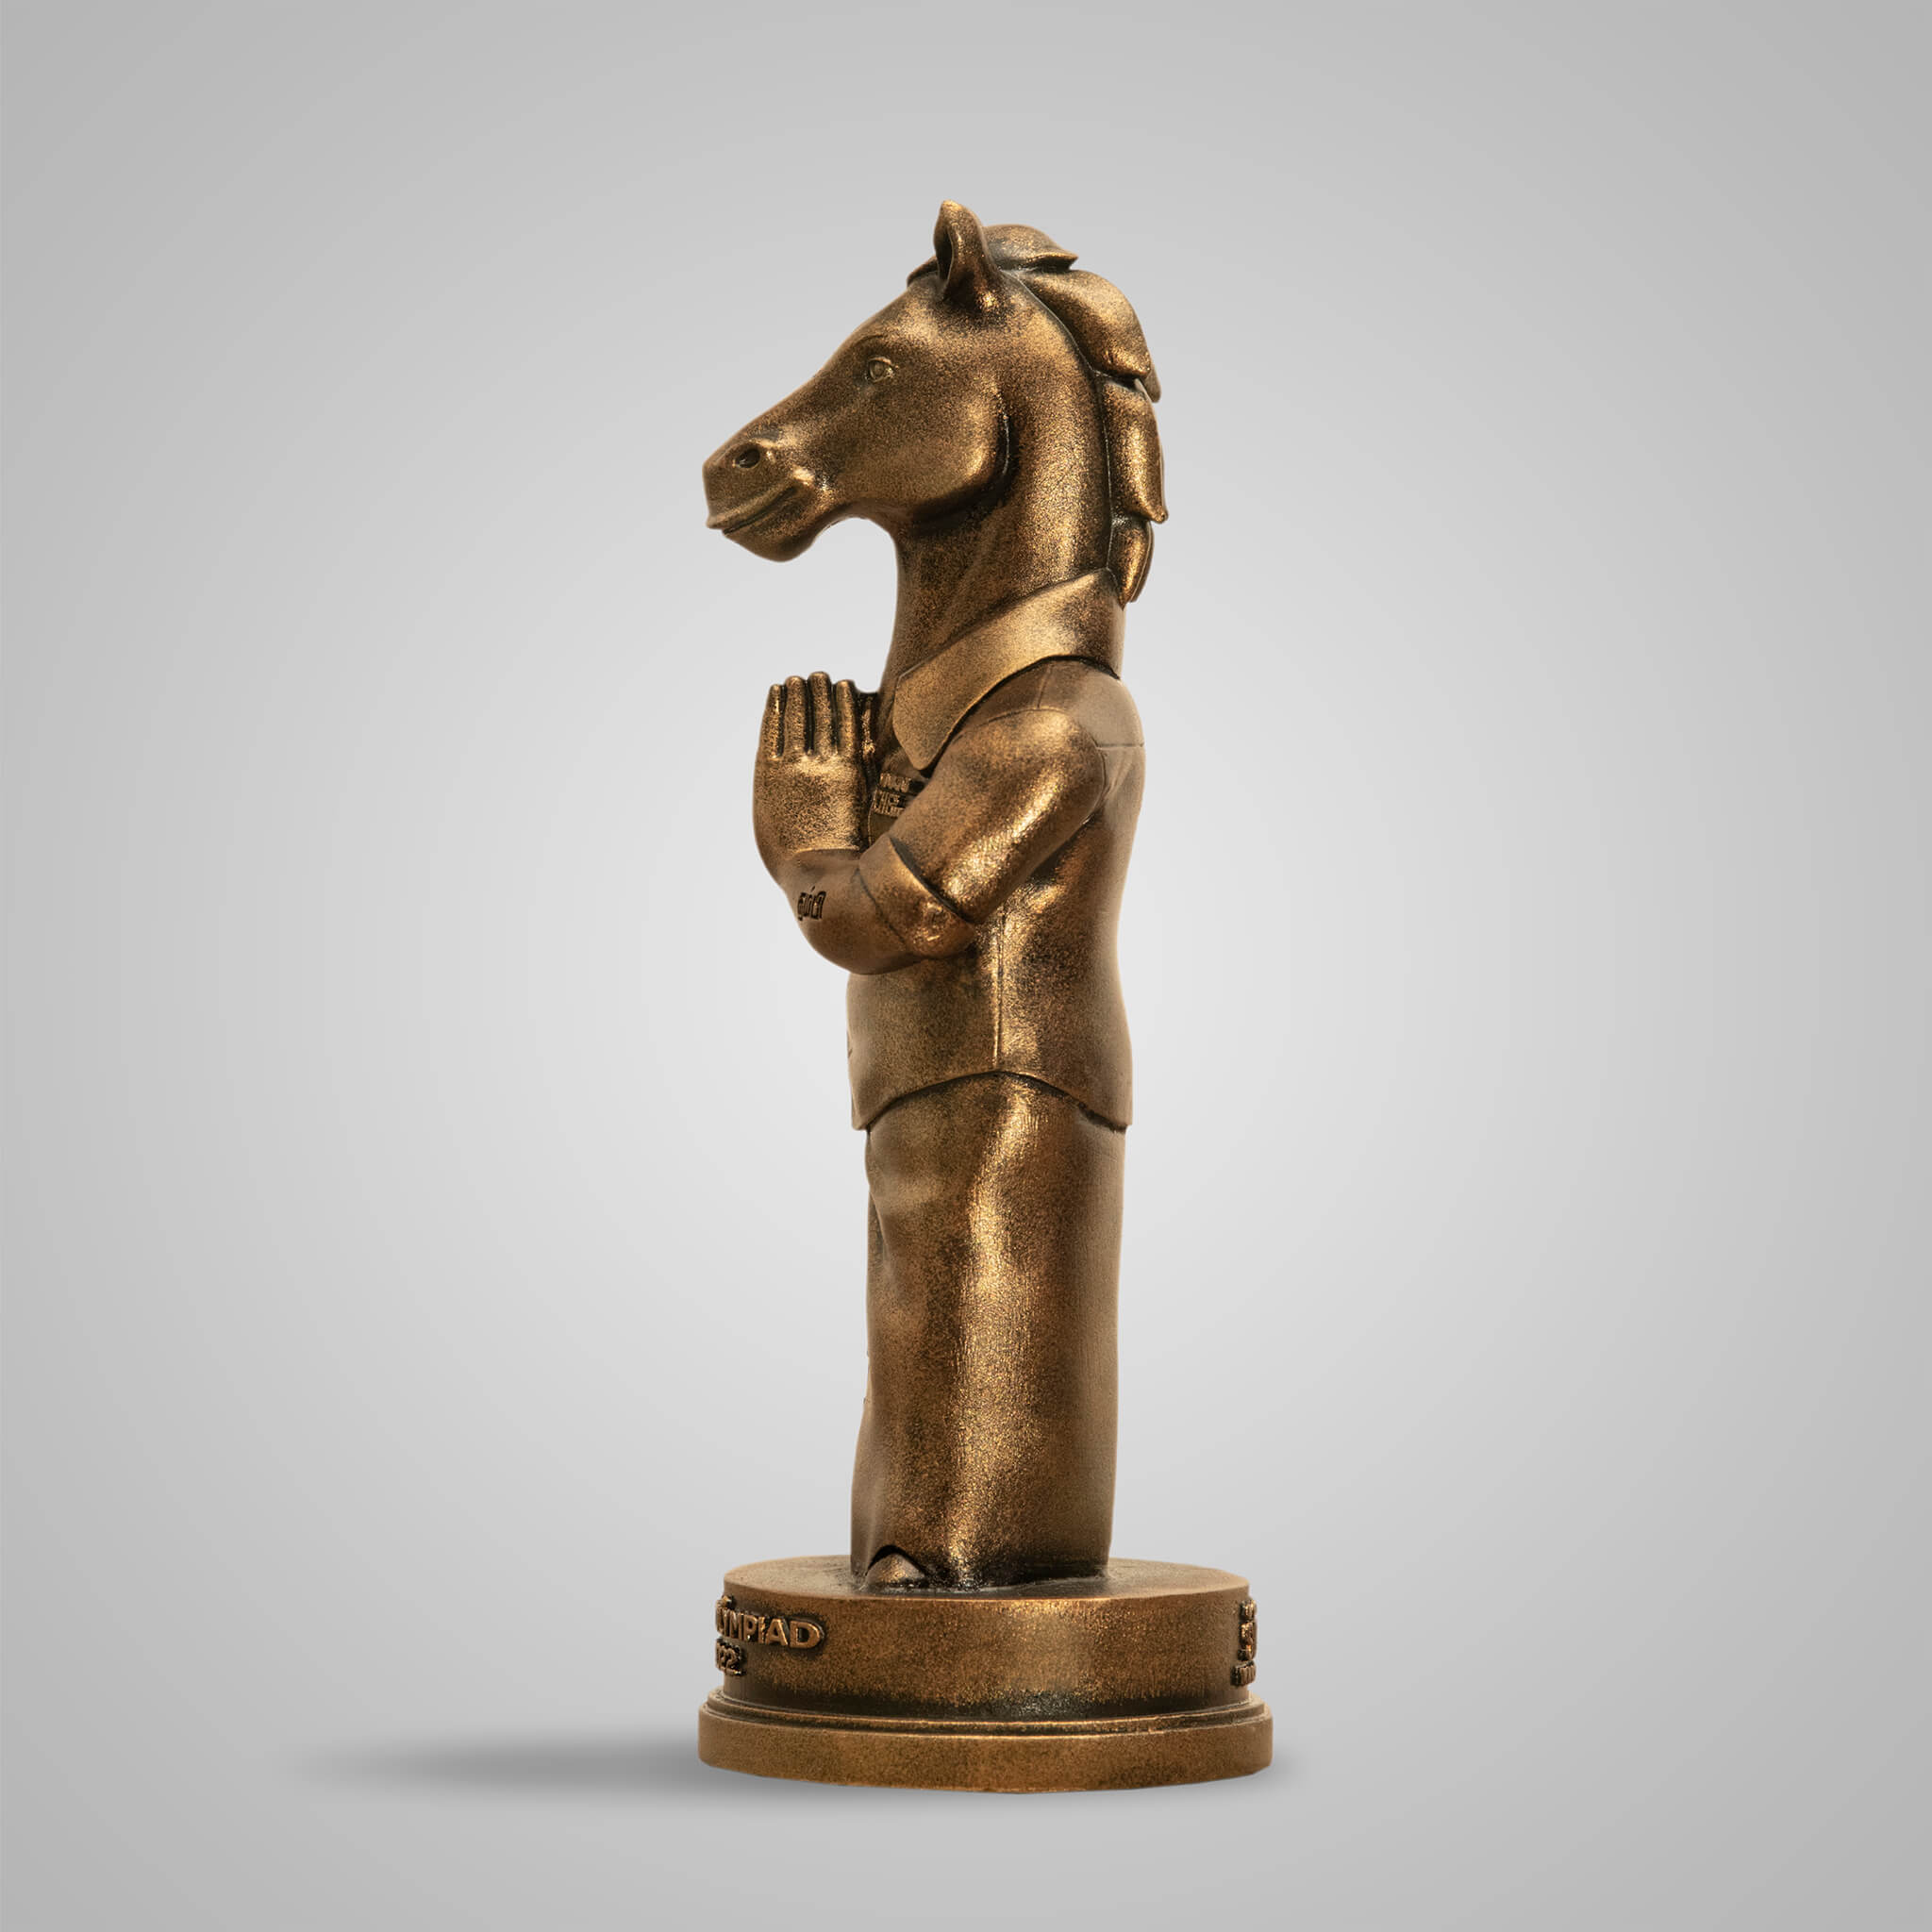 Meet Thambi, the mascot of Chess Olympiad 2022 - ESPN